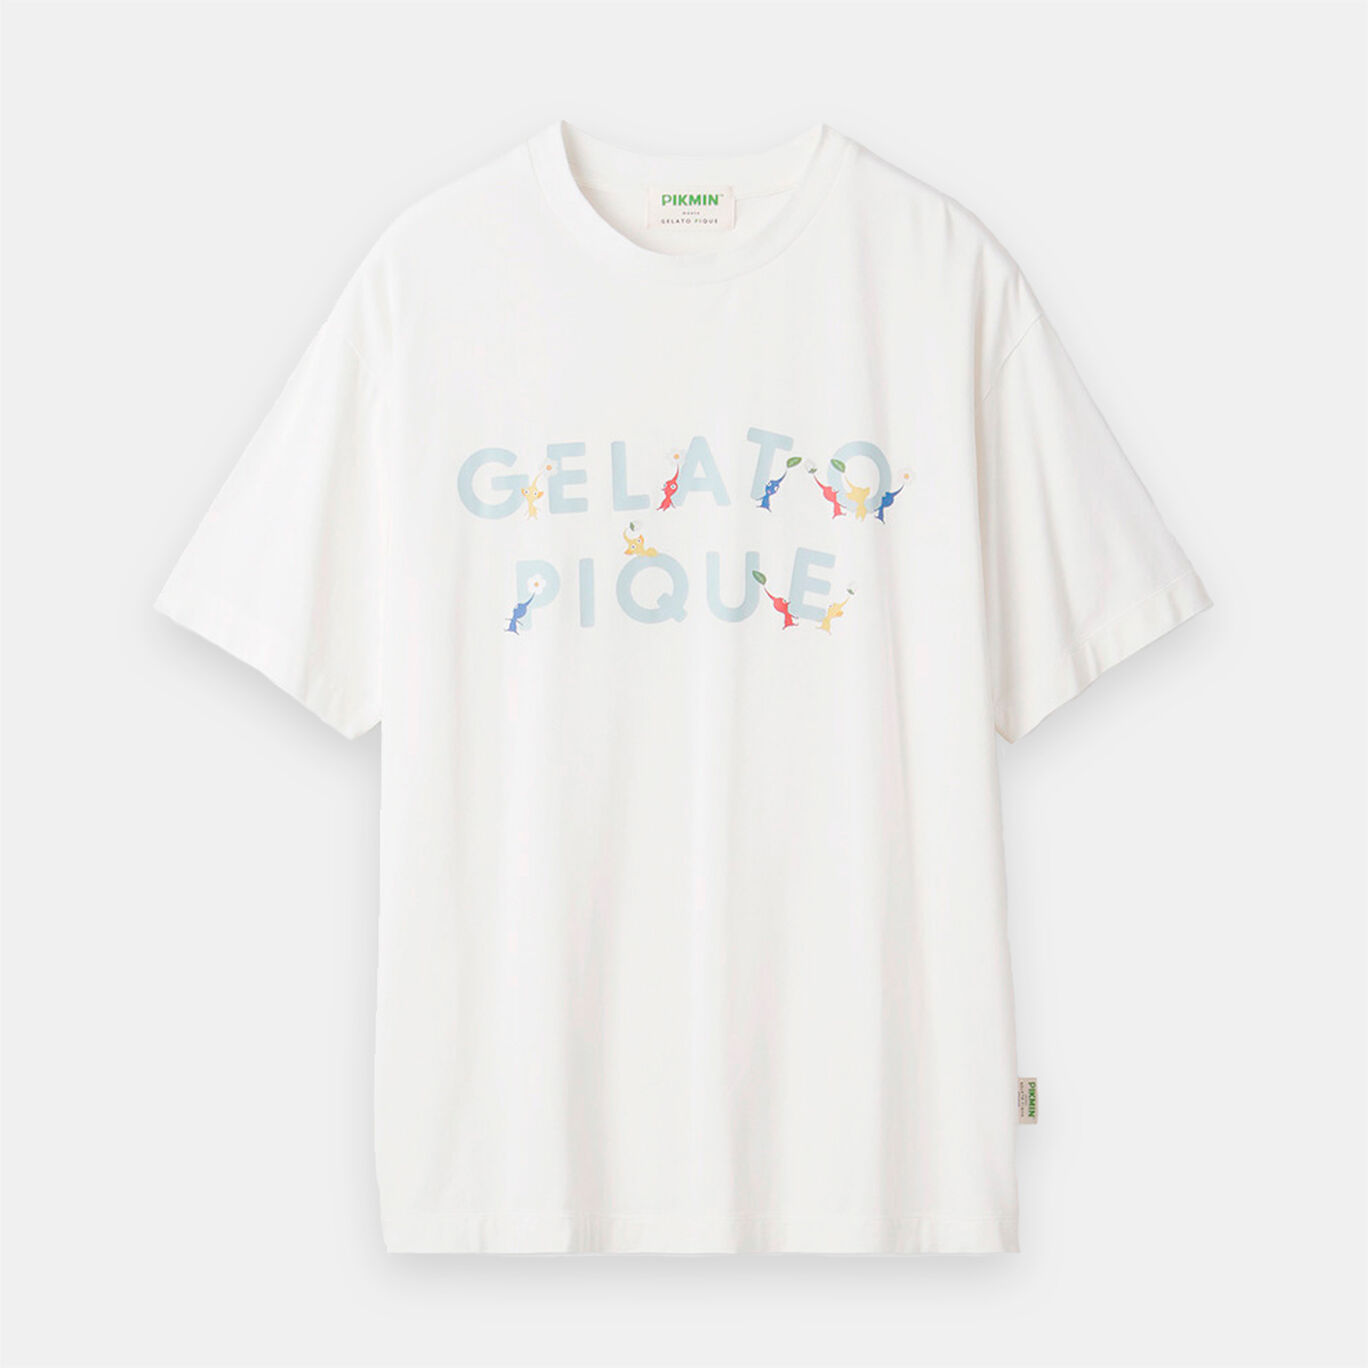 【PIKMIN meets GELATO PIQUE】プリントTシャツ OWHT